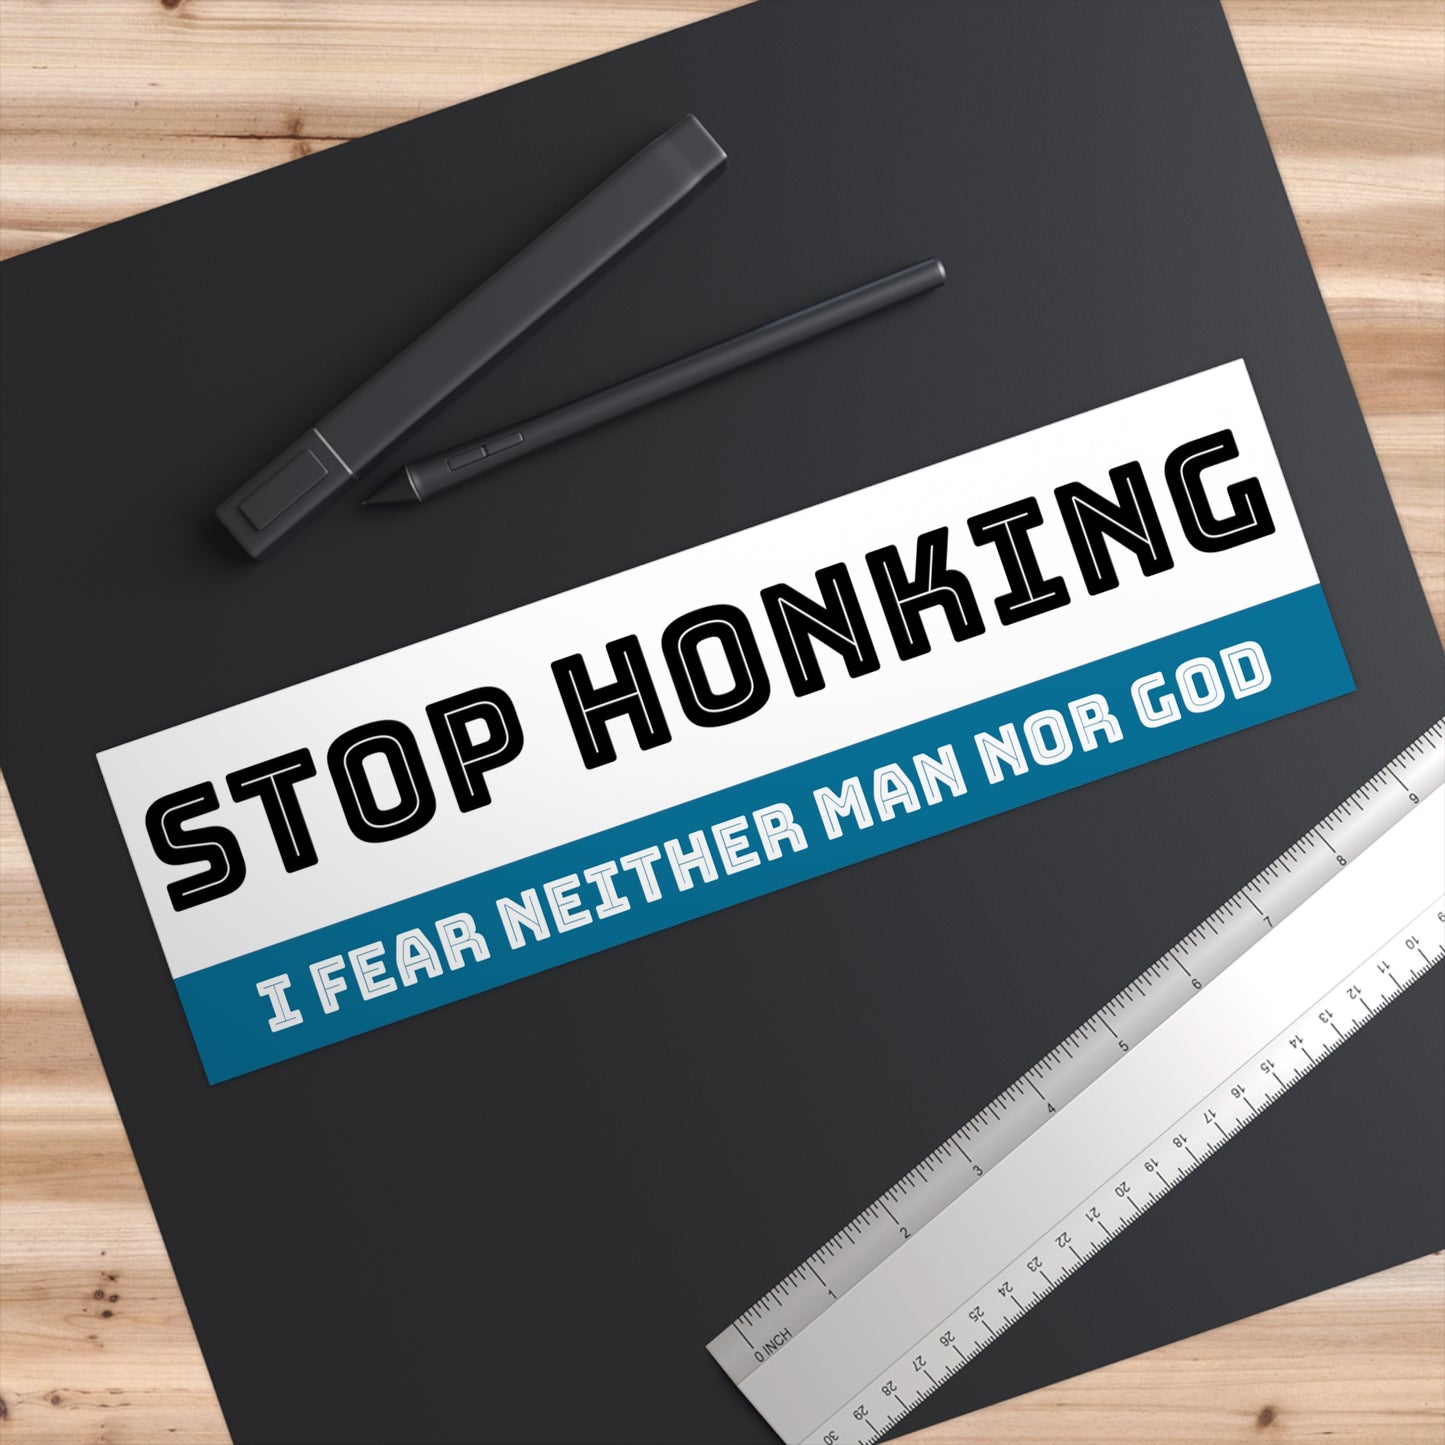 Stop Honking, I Fear Neither Man Nor God Bumper Sticker